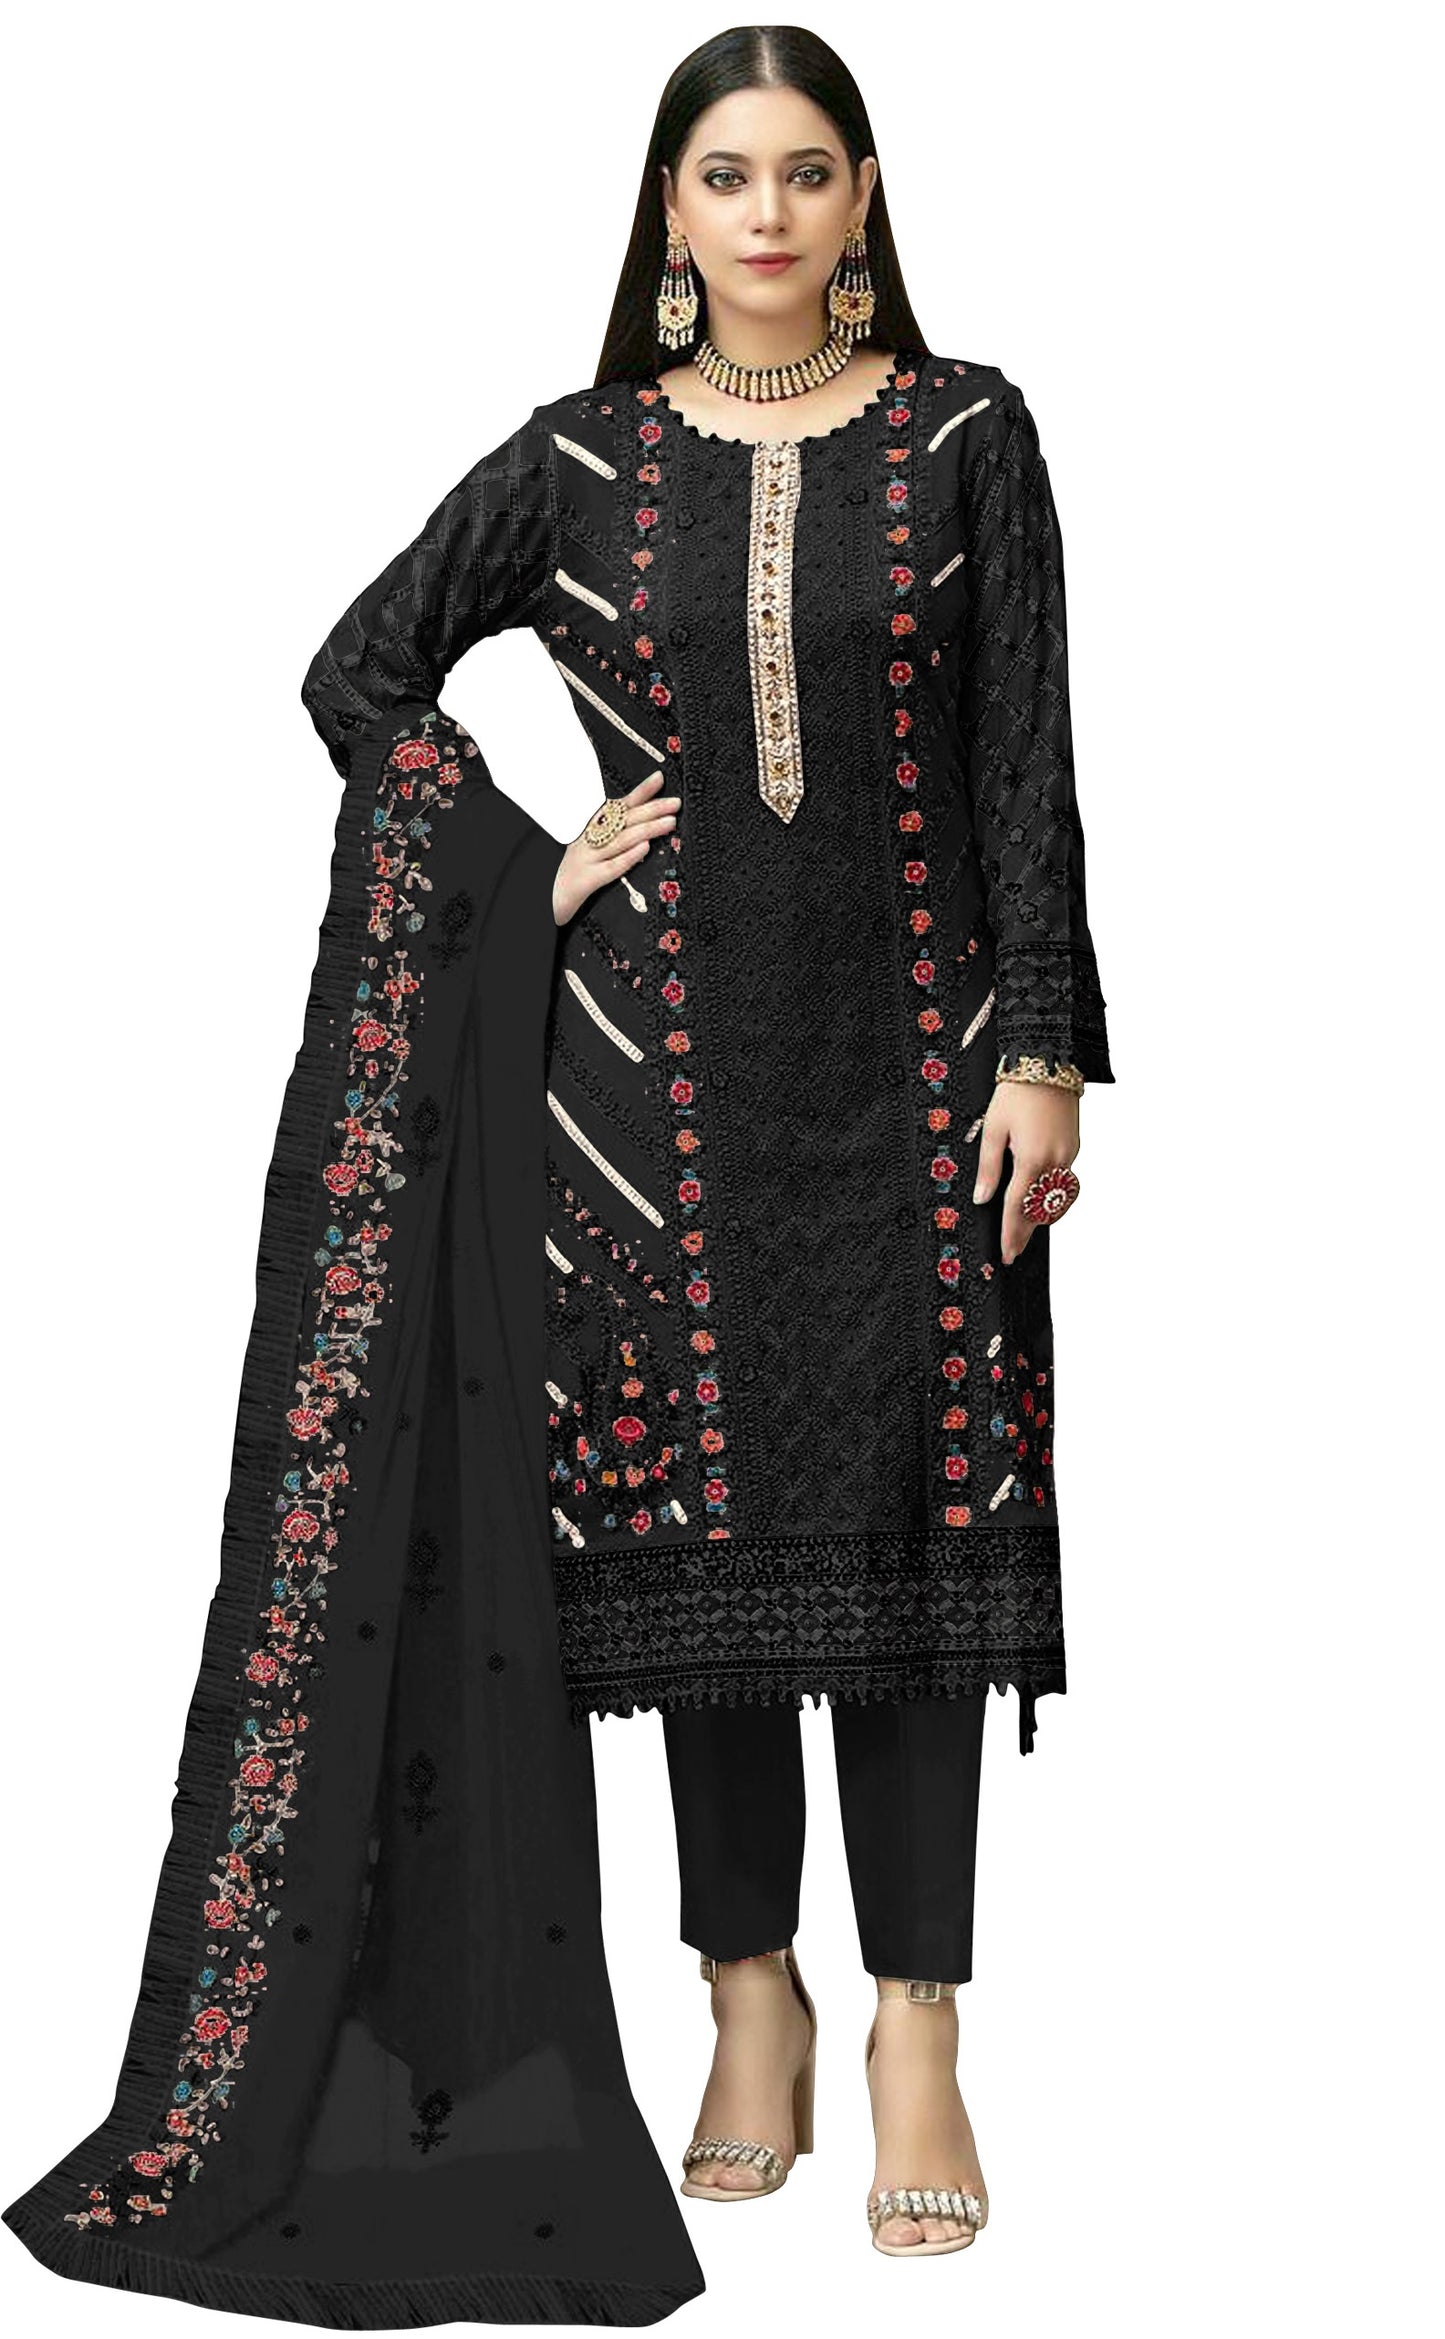 Black Color Georgette With Embroidery Work Semi Stitch Pakistani Salwar Suit